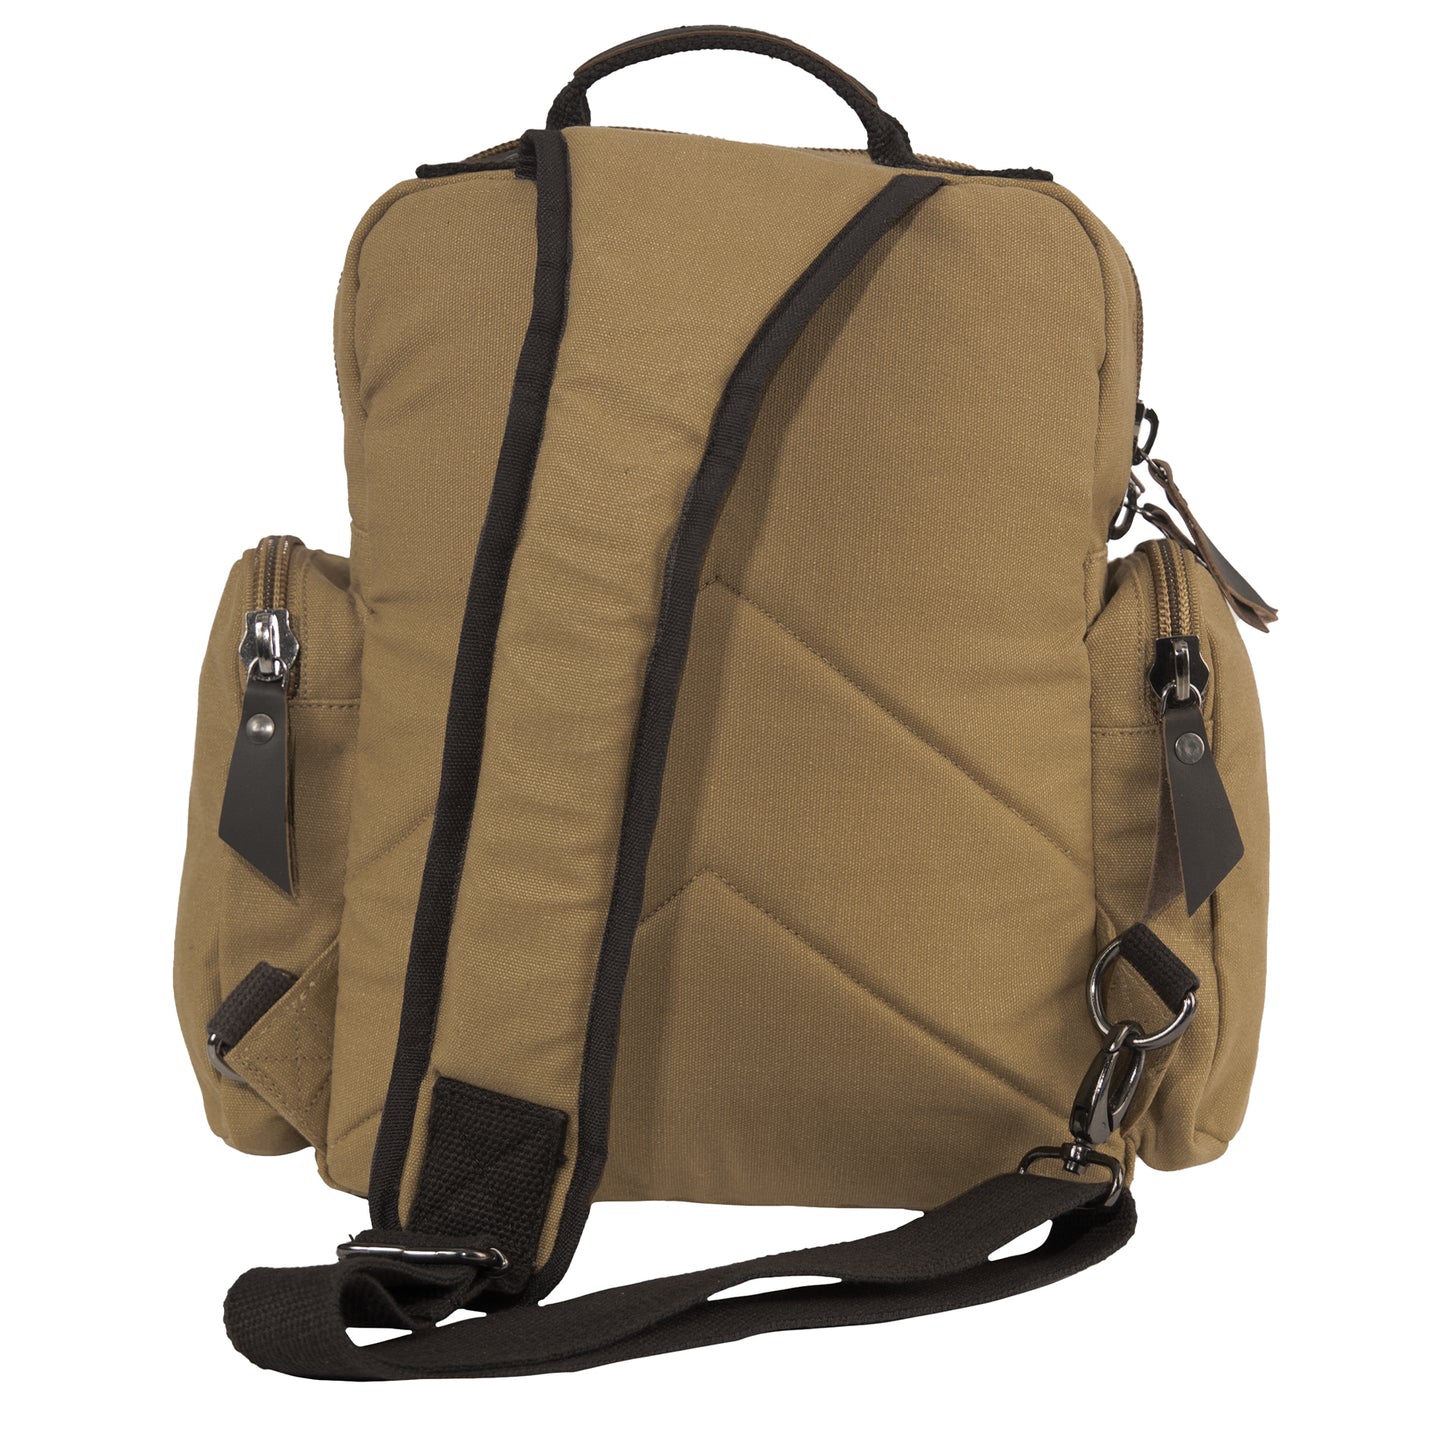 Vintage Canvas Sling Style Backpack - Hiking Travel School